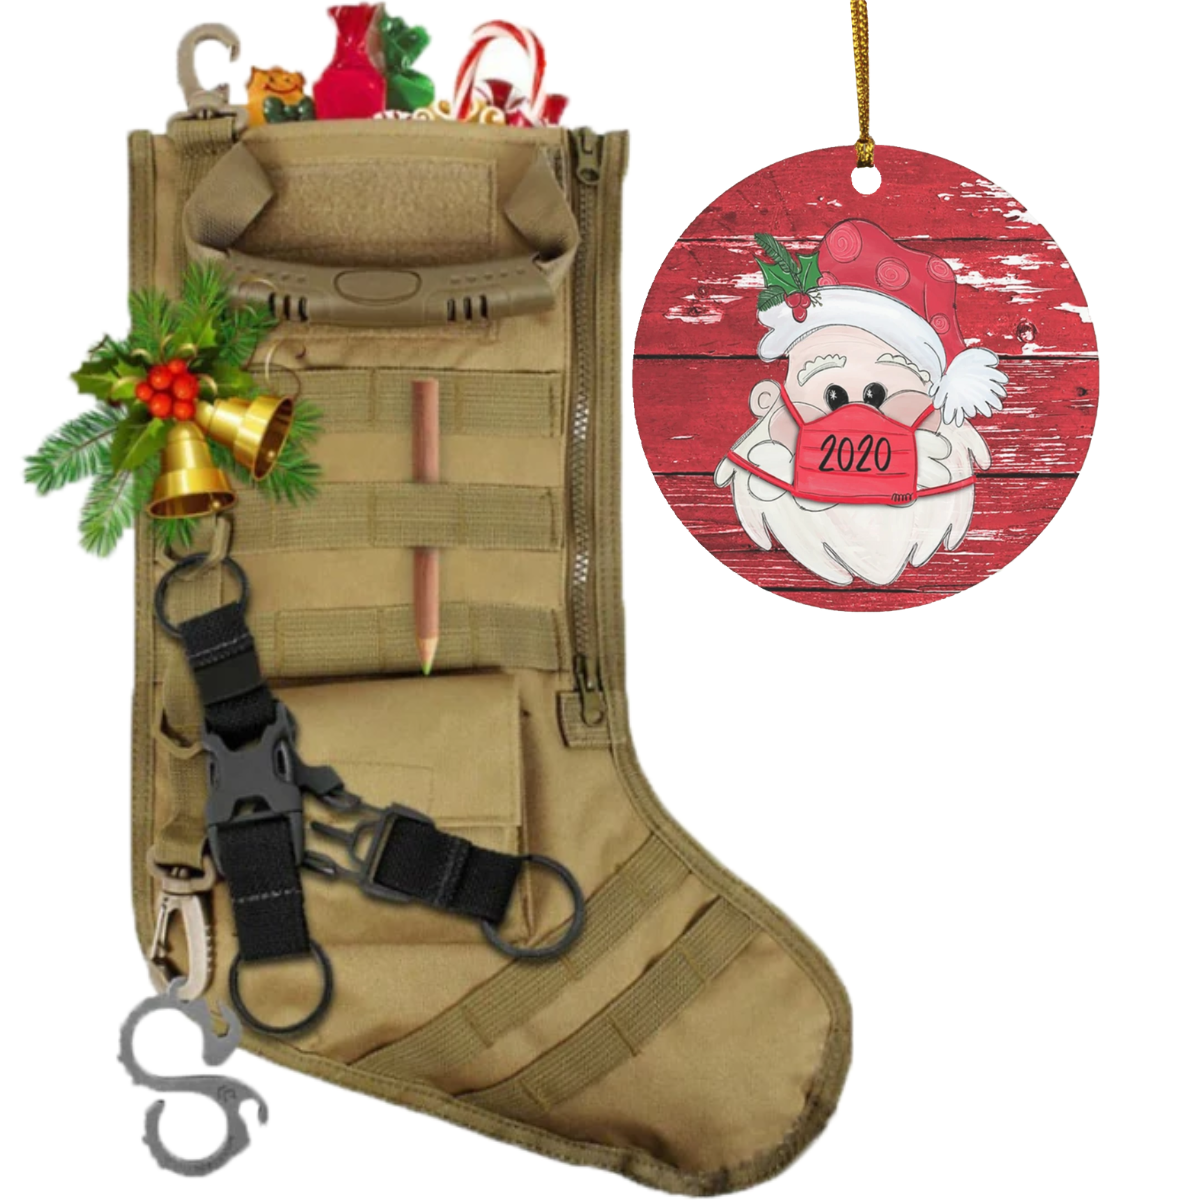 Tactical Xmas Stocking - Family Xmas Stockings with Santa Wearing Mask Ornament